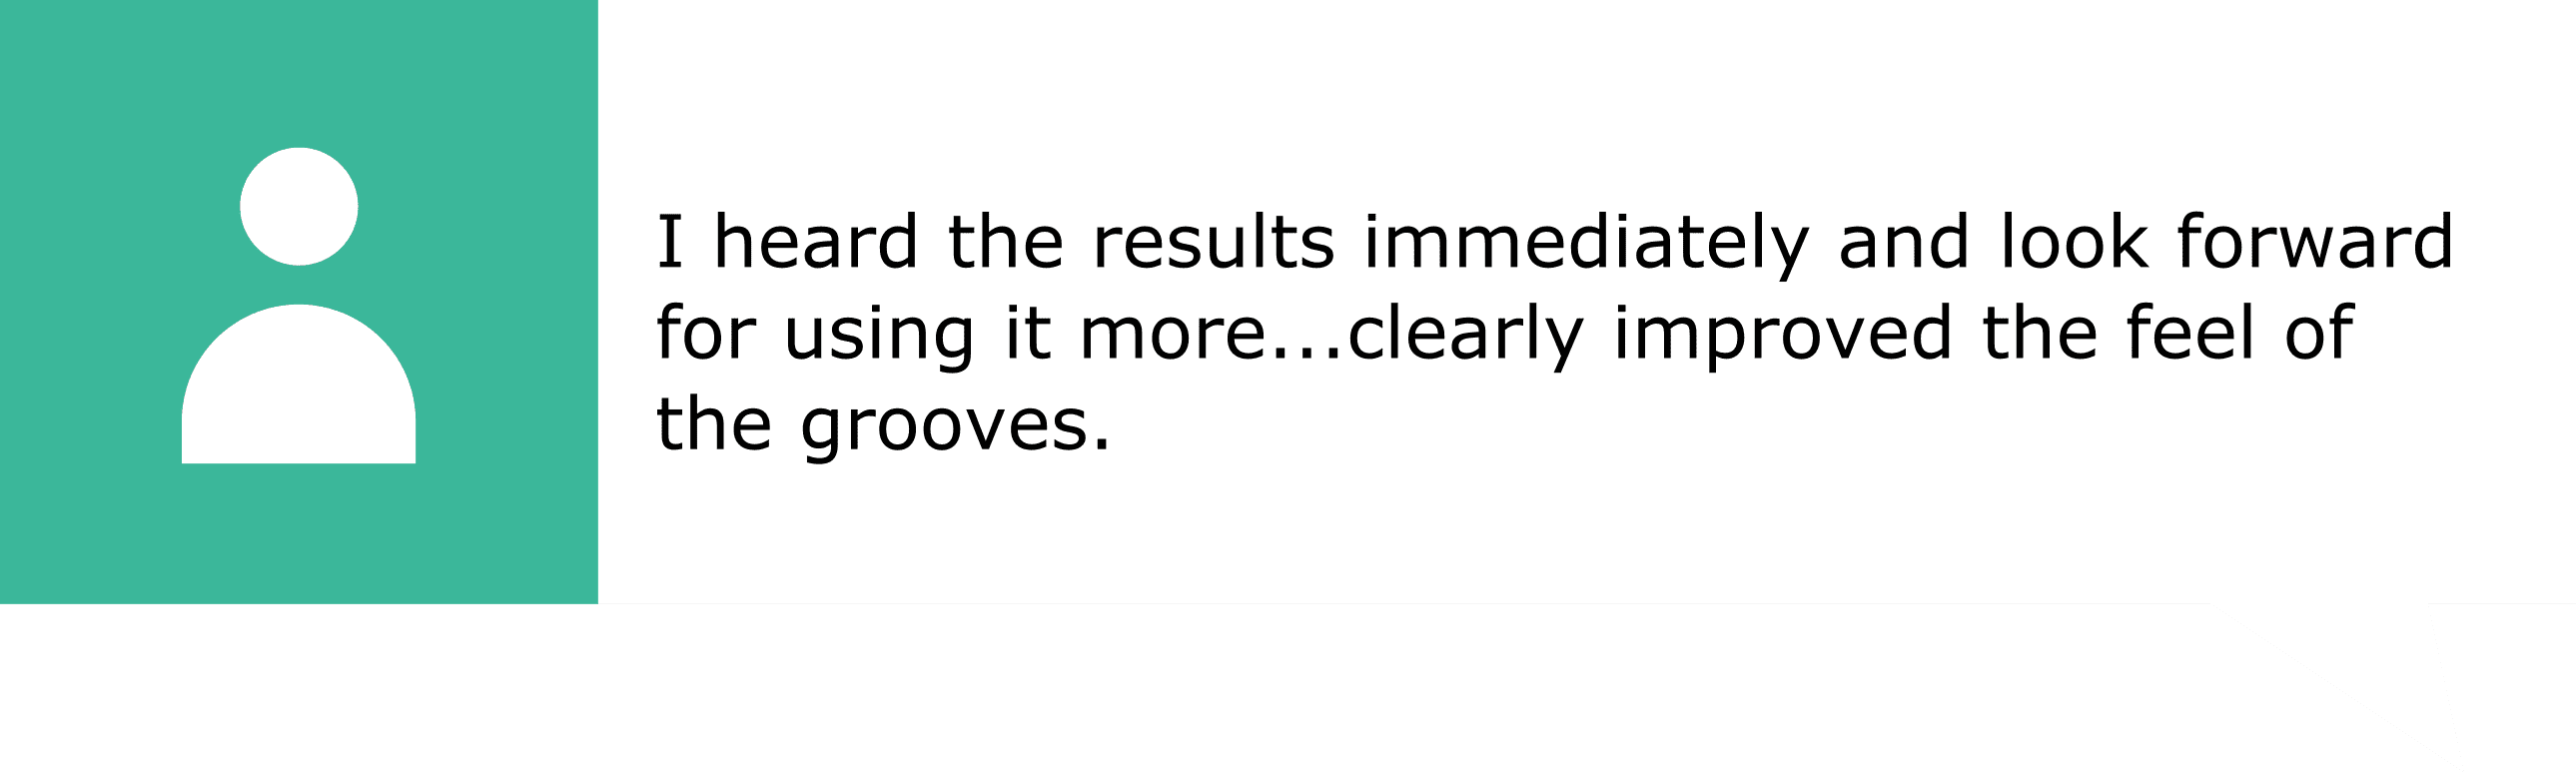 Green_-_Heard_Results